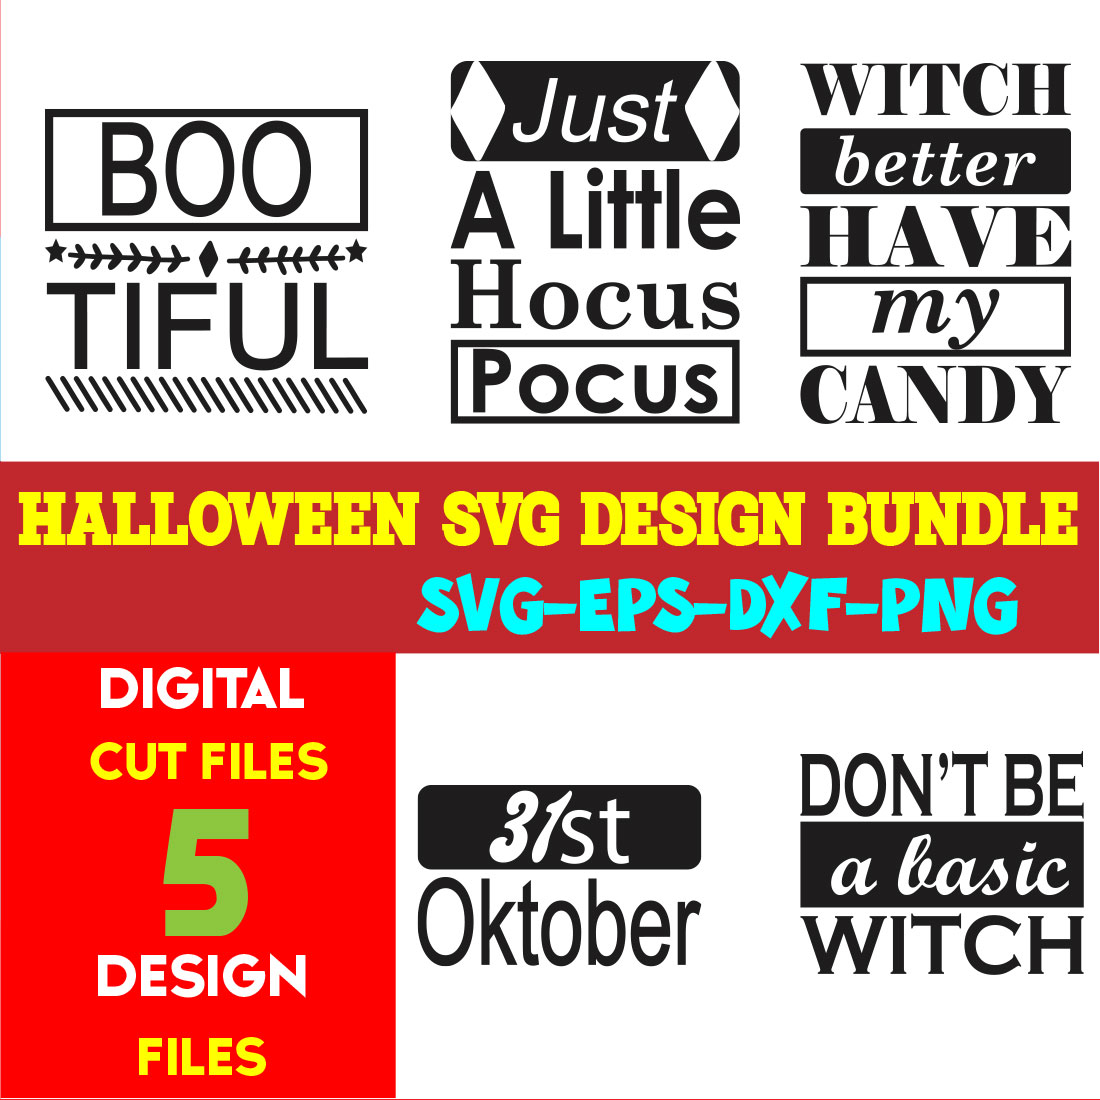 Halloween T-shirt Design Bundle Vol-51 cover image.